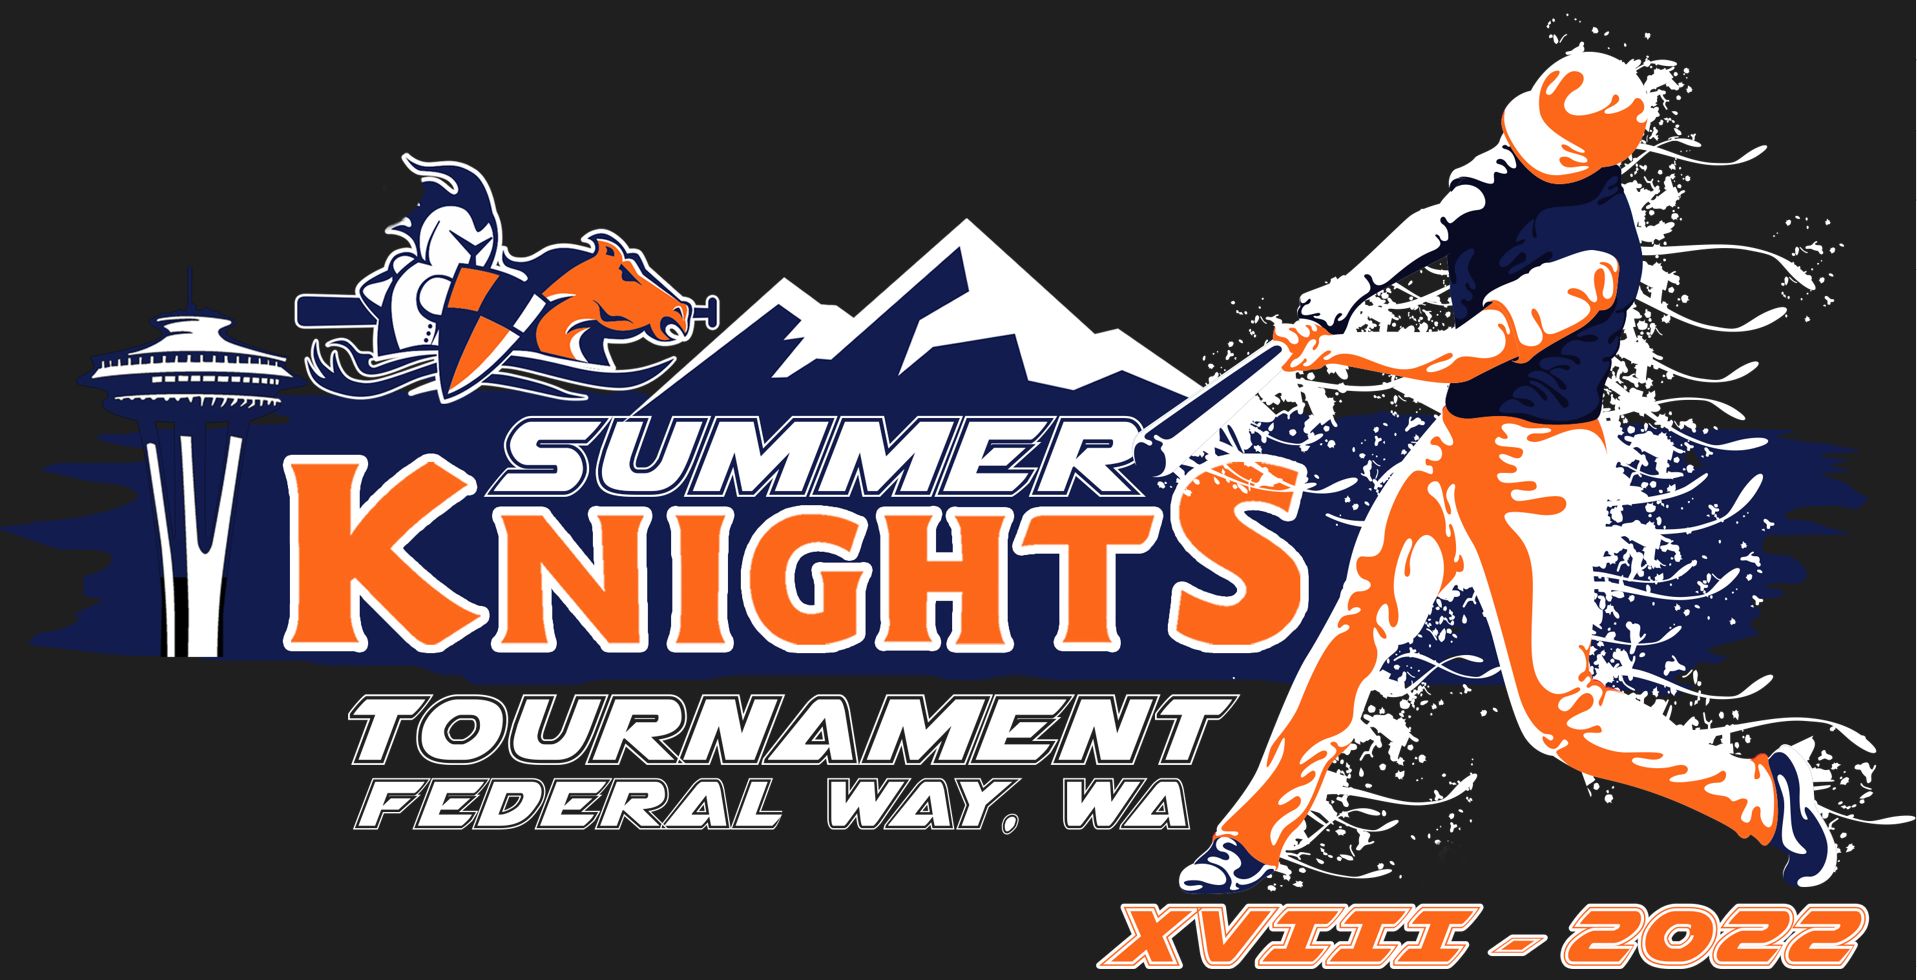 Summer Knights Tournament XVIII Federal way, Washington 98023